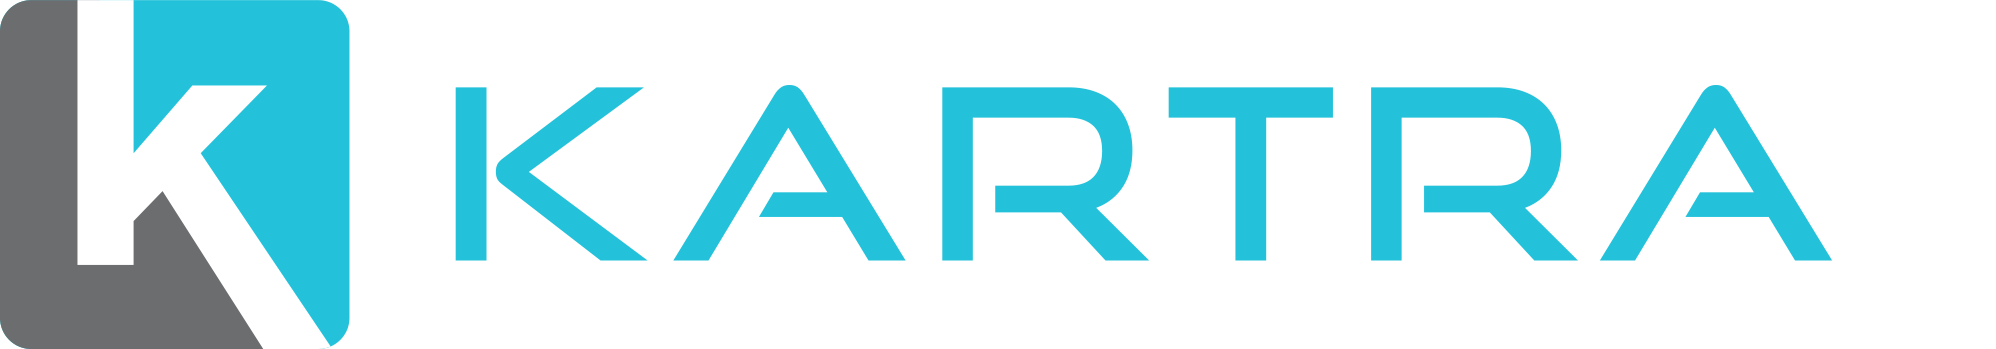 Kartra Logo